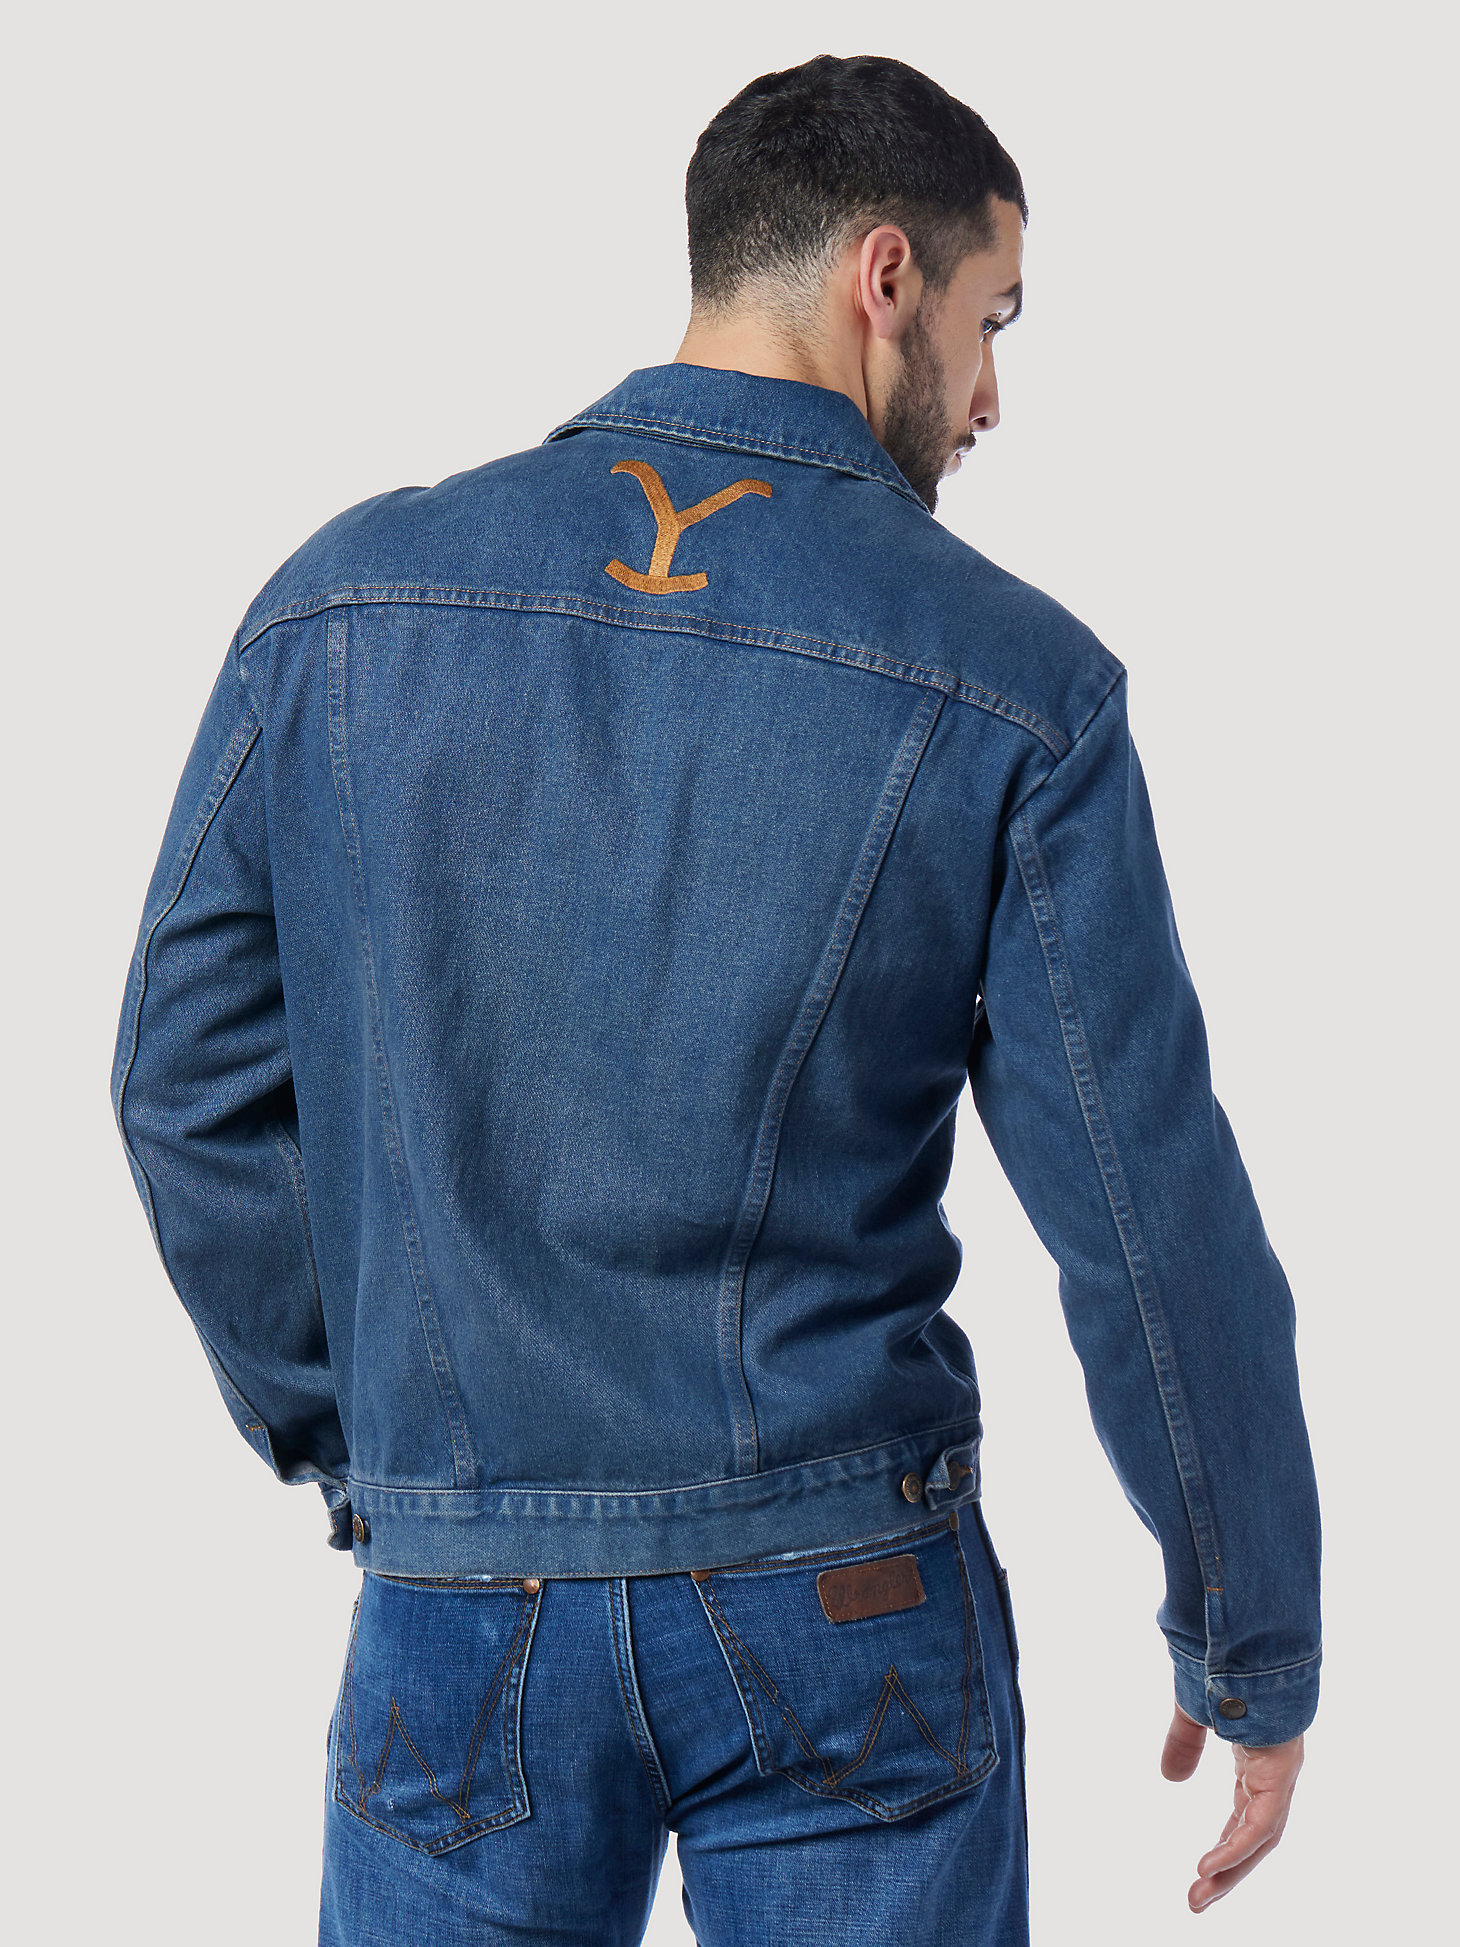 Wrangler x Yellowstone Men's Embroidered Denim Jacket in Tinted Medium Wash alternative view 3